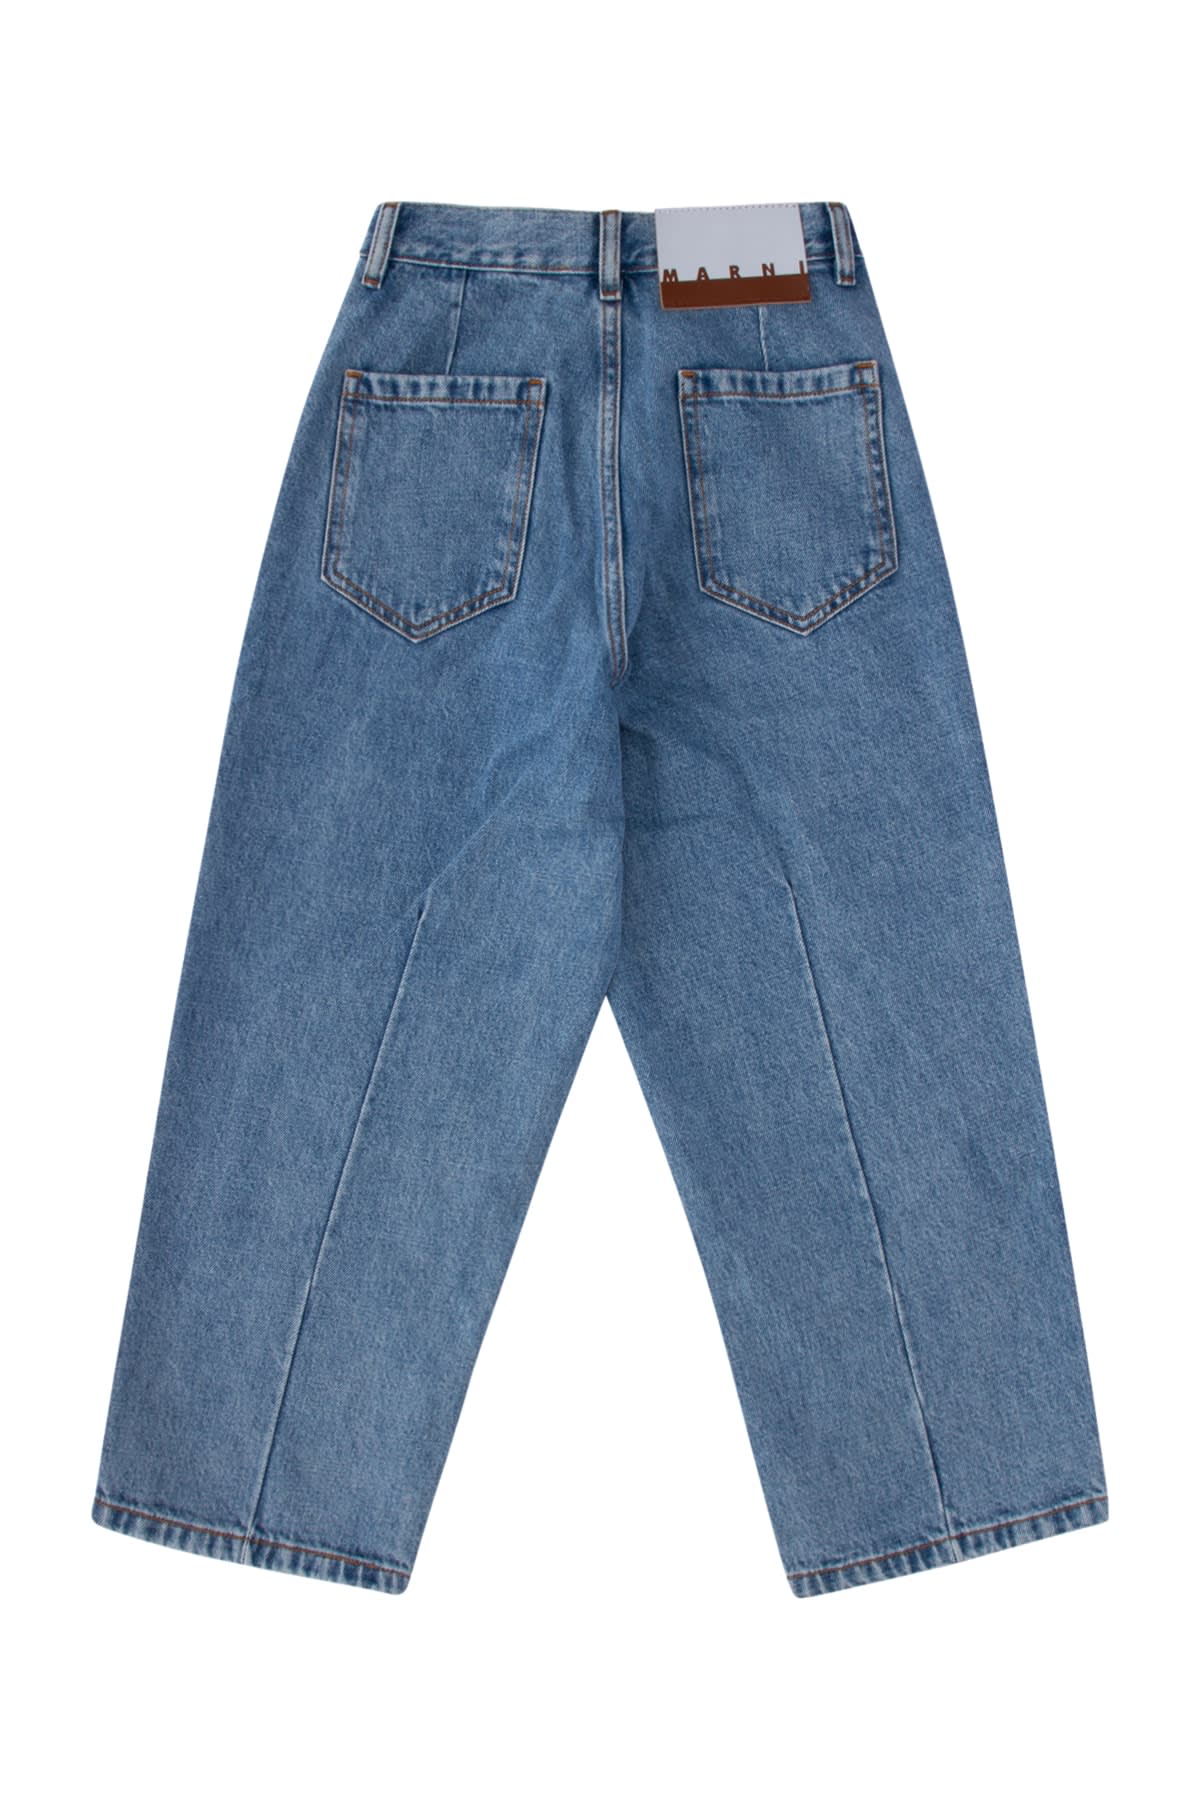 Marni Kids' Jeans In 0m01